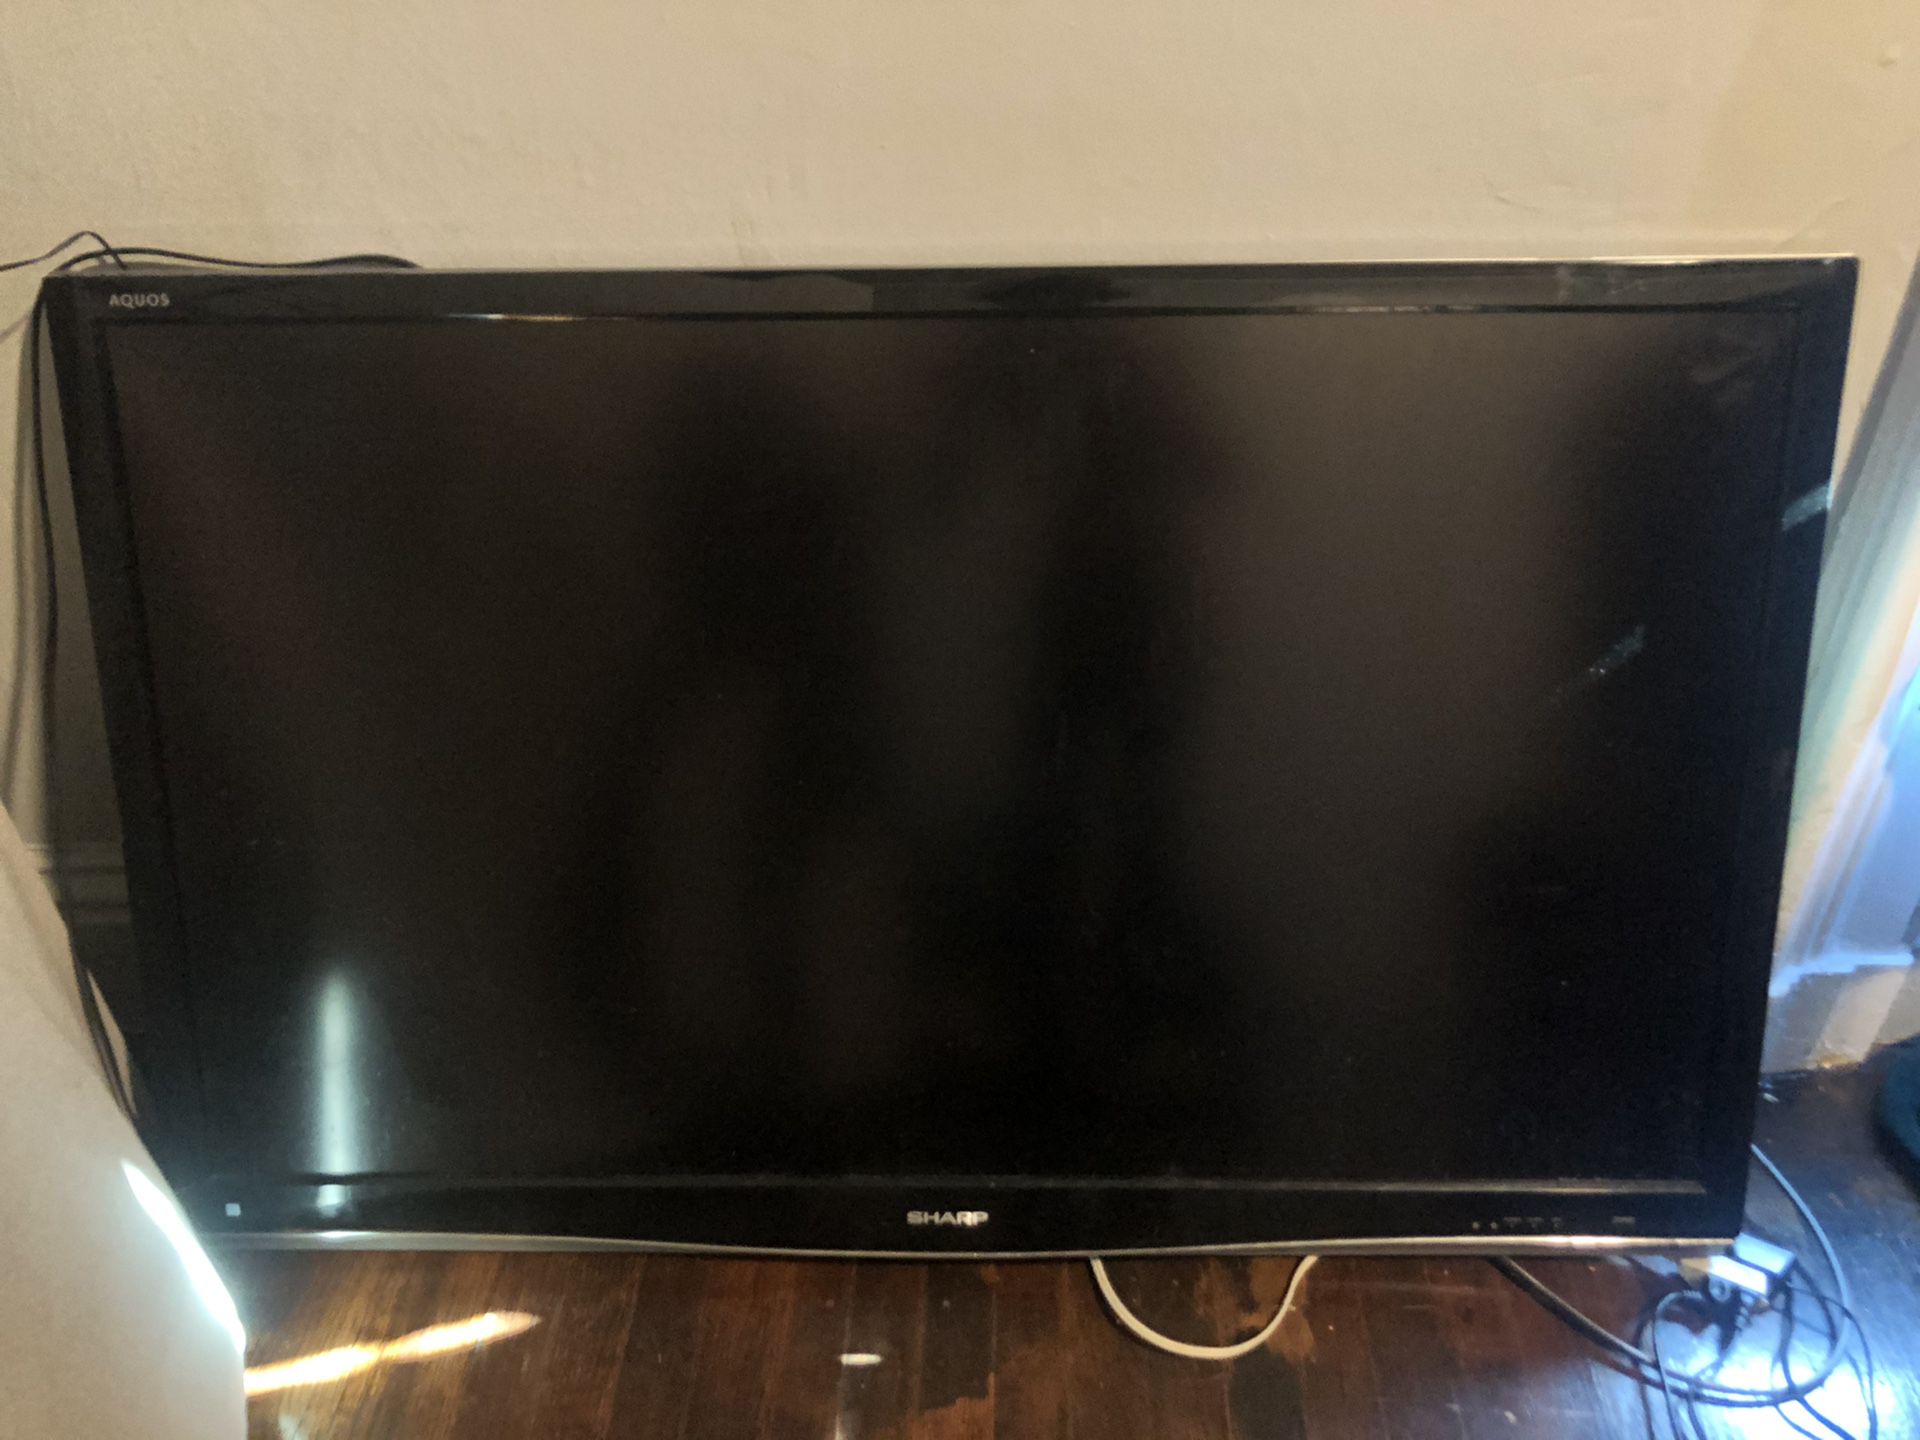 55 inch tv